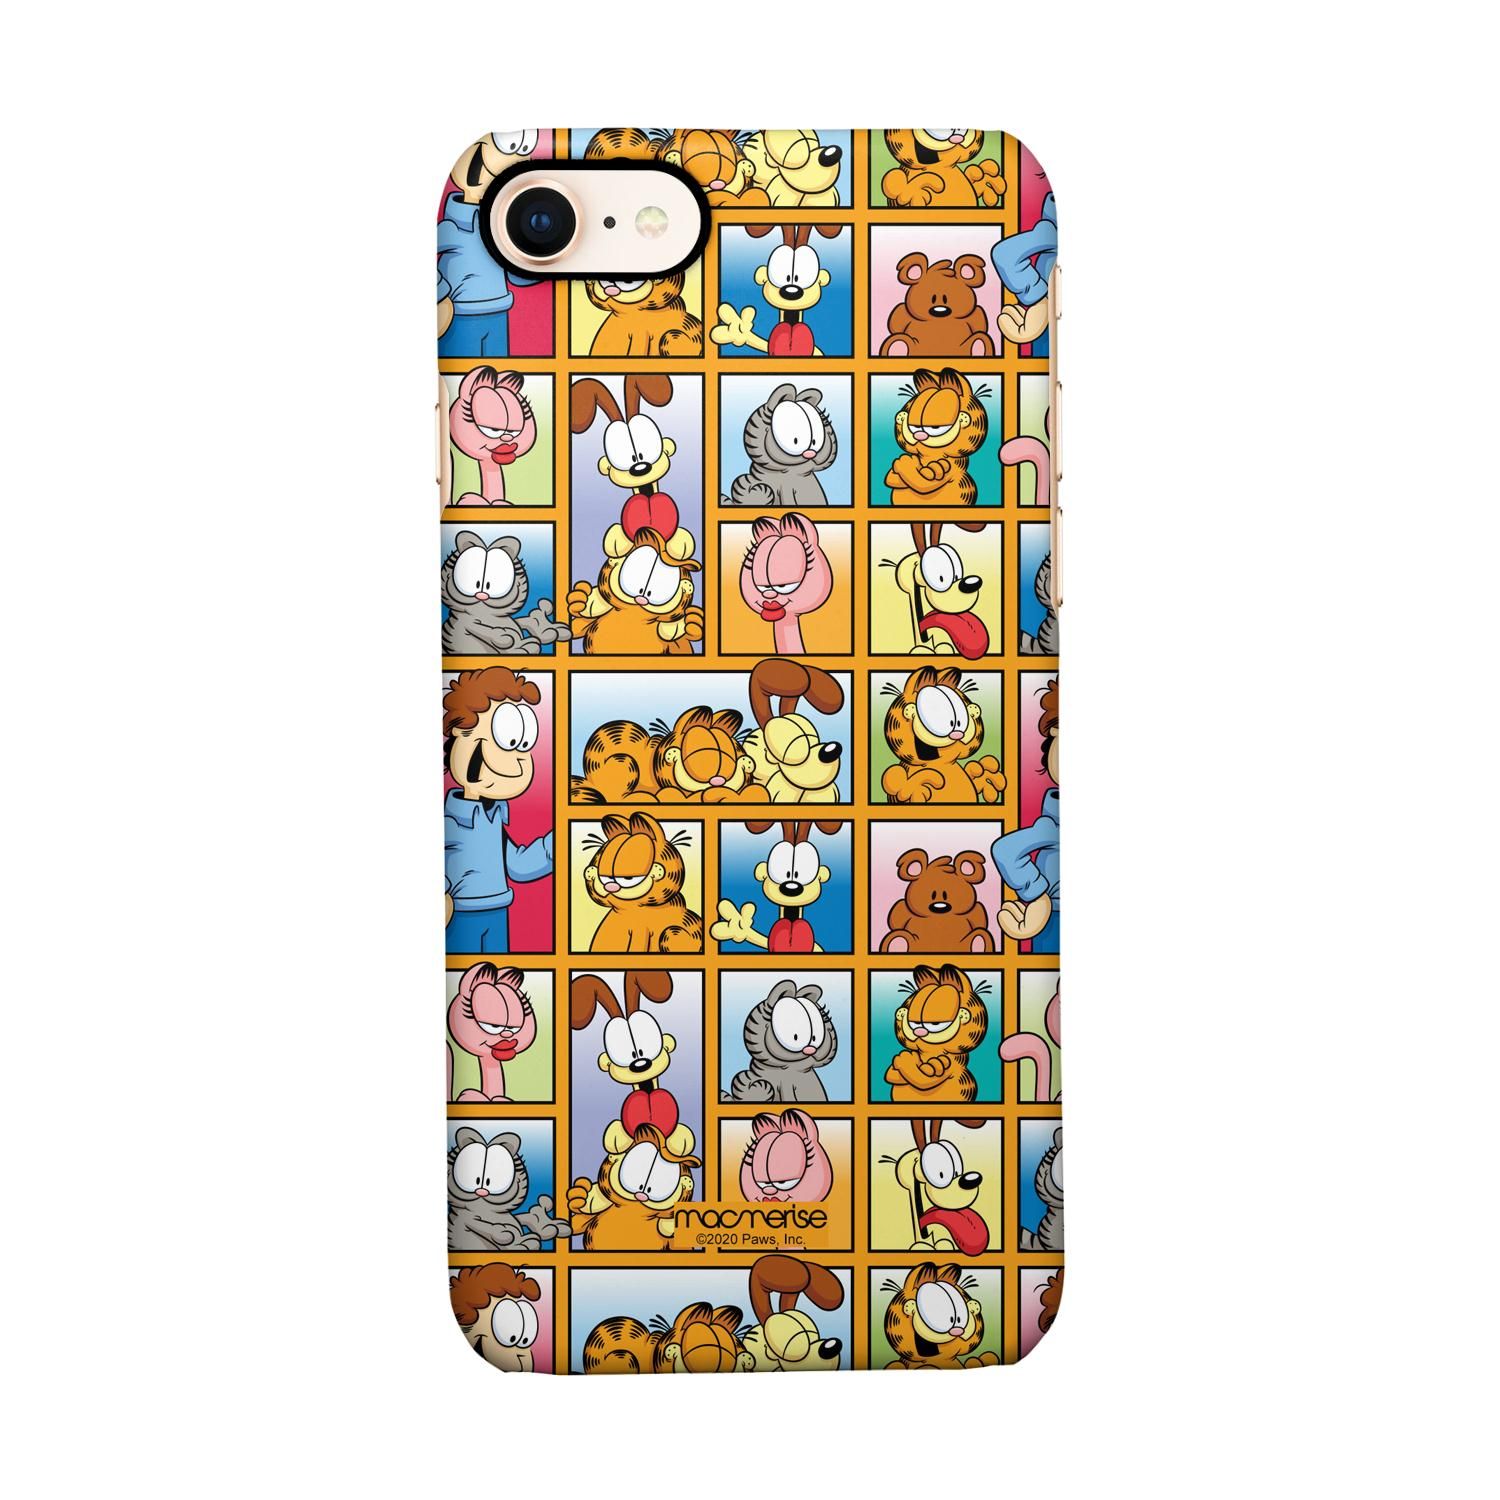 Garfield Collage - Sleek Case for iPhone 7